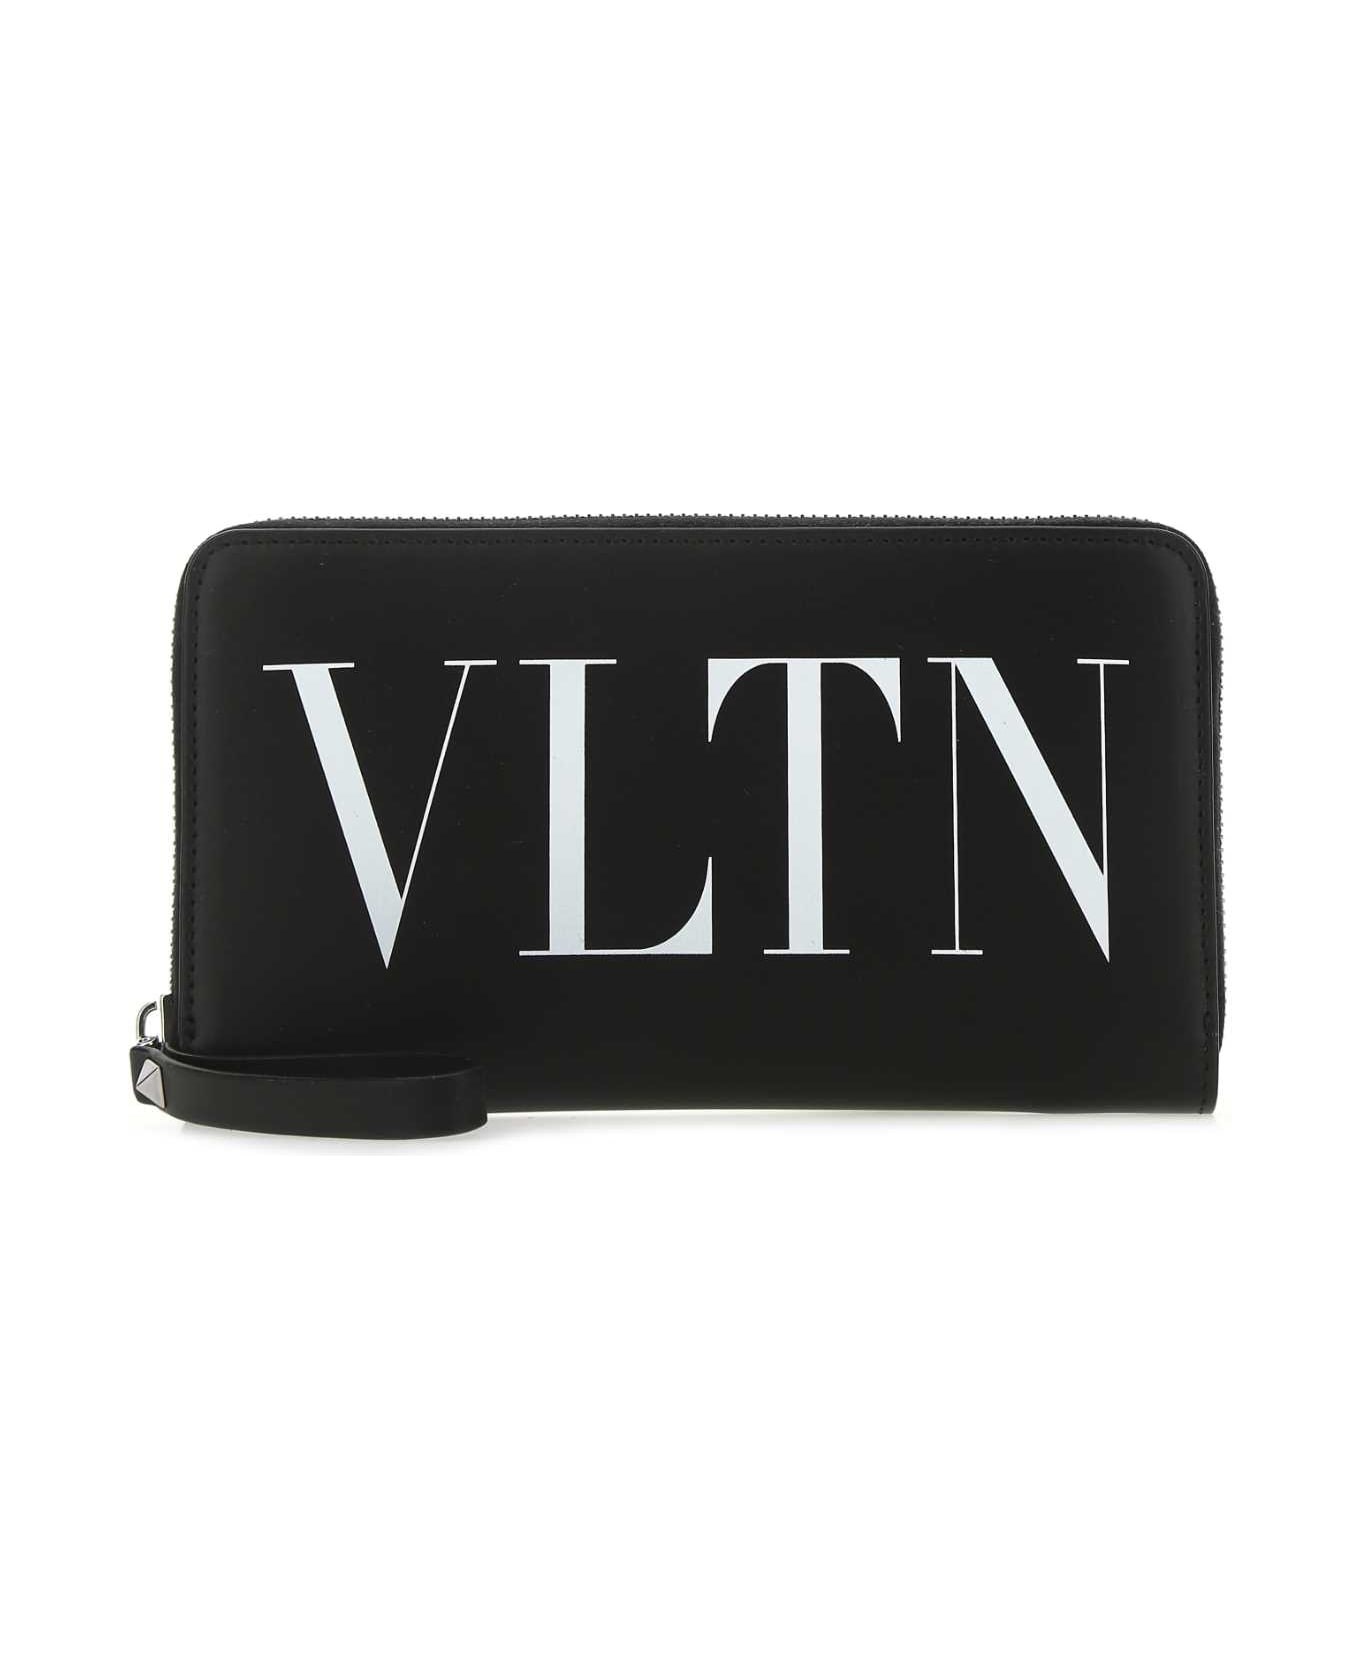 Valentino Garavani Black Leather Vltn Wallet - NEROBIANCO 財布